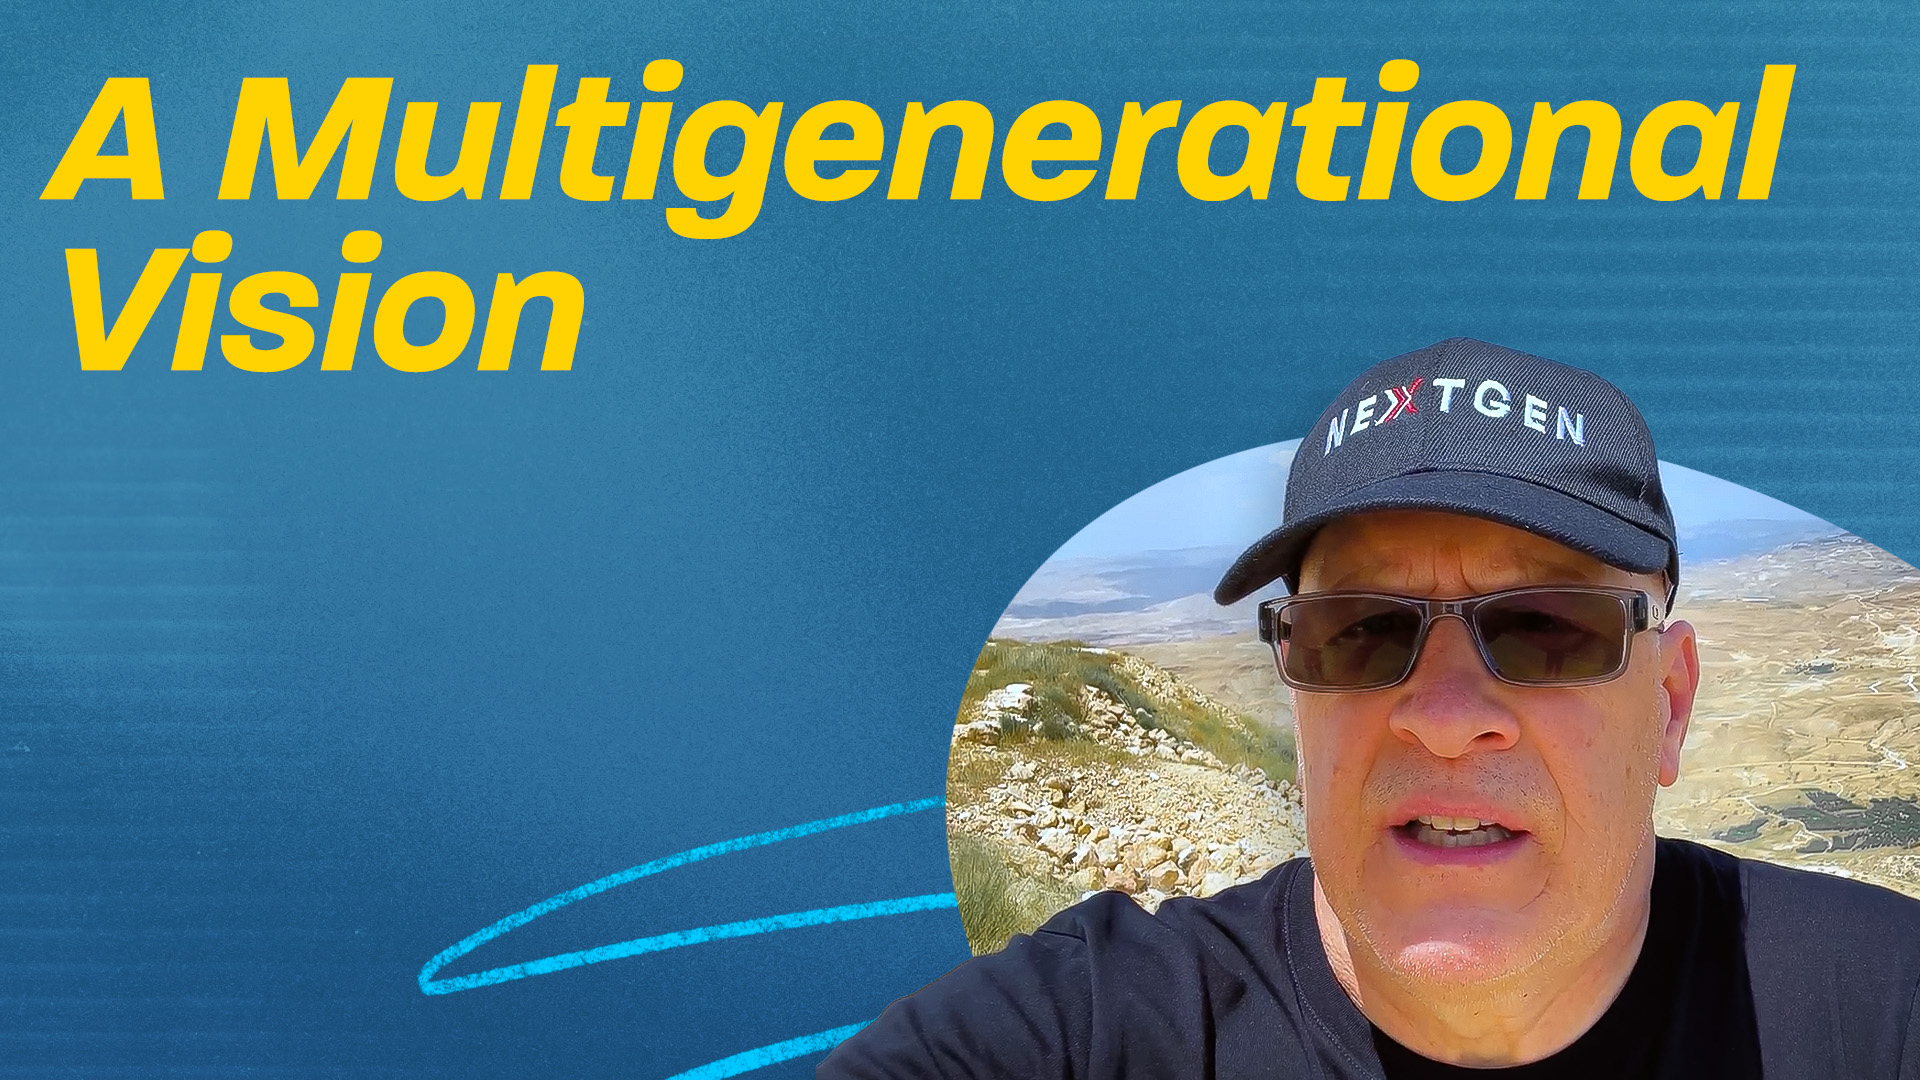 A Multigenerational Vision